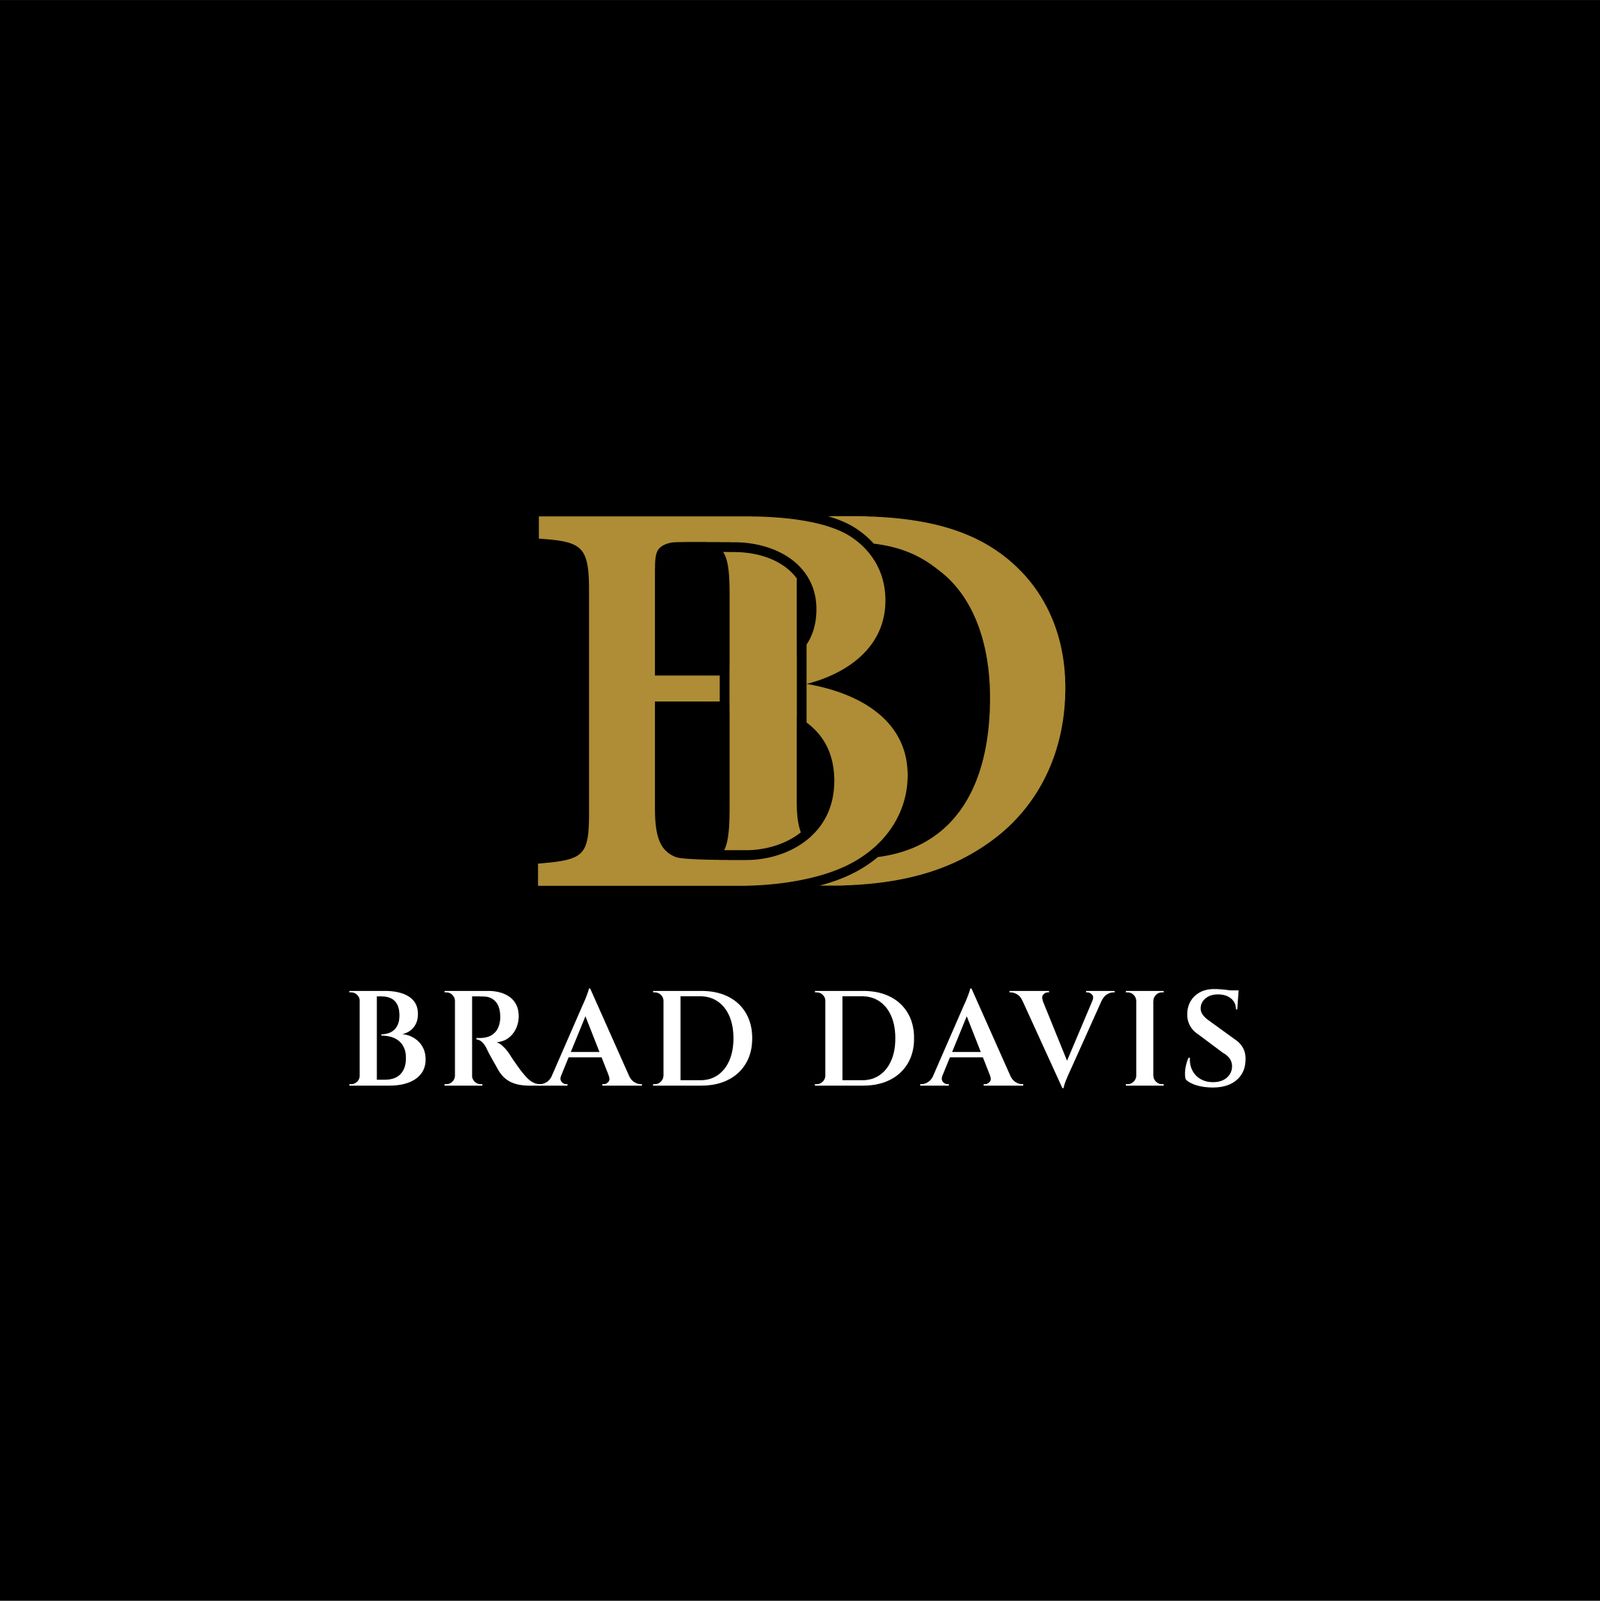 Brad Davis